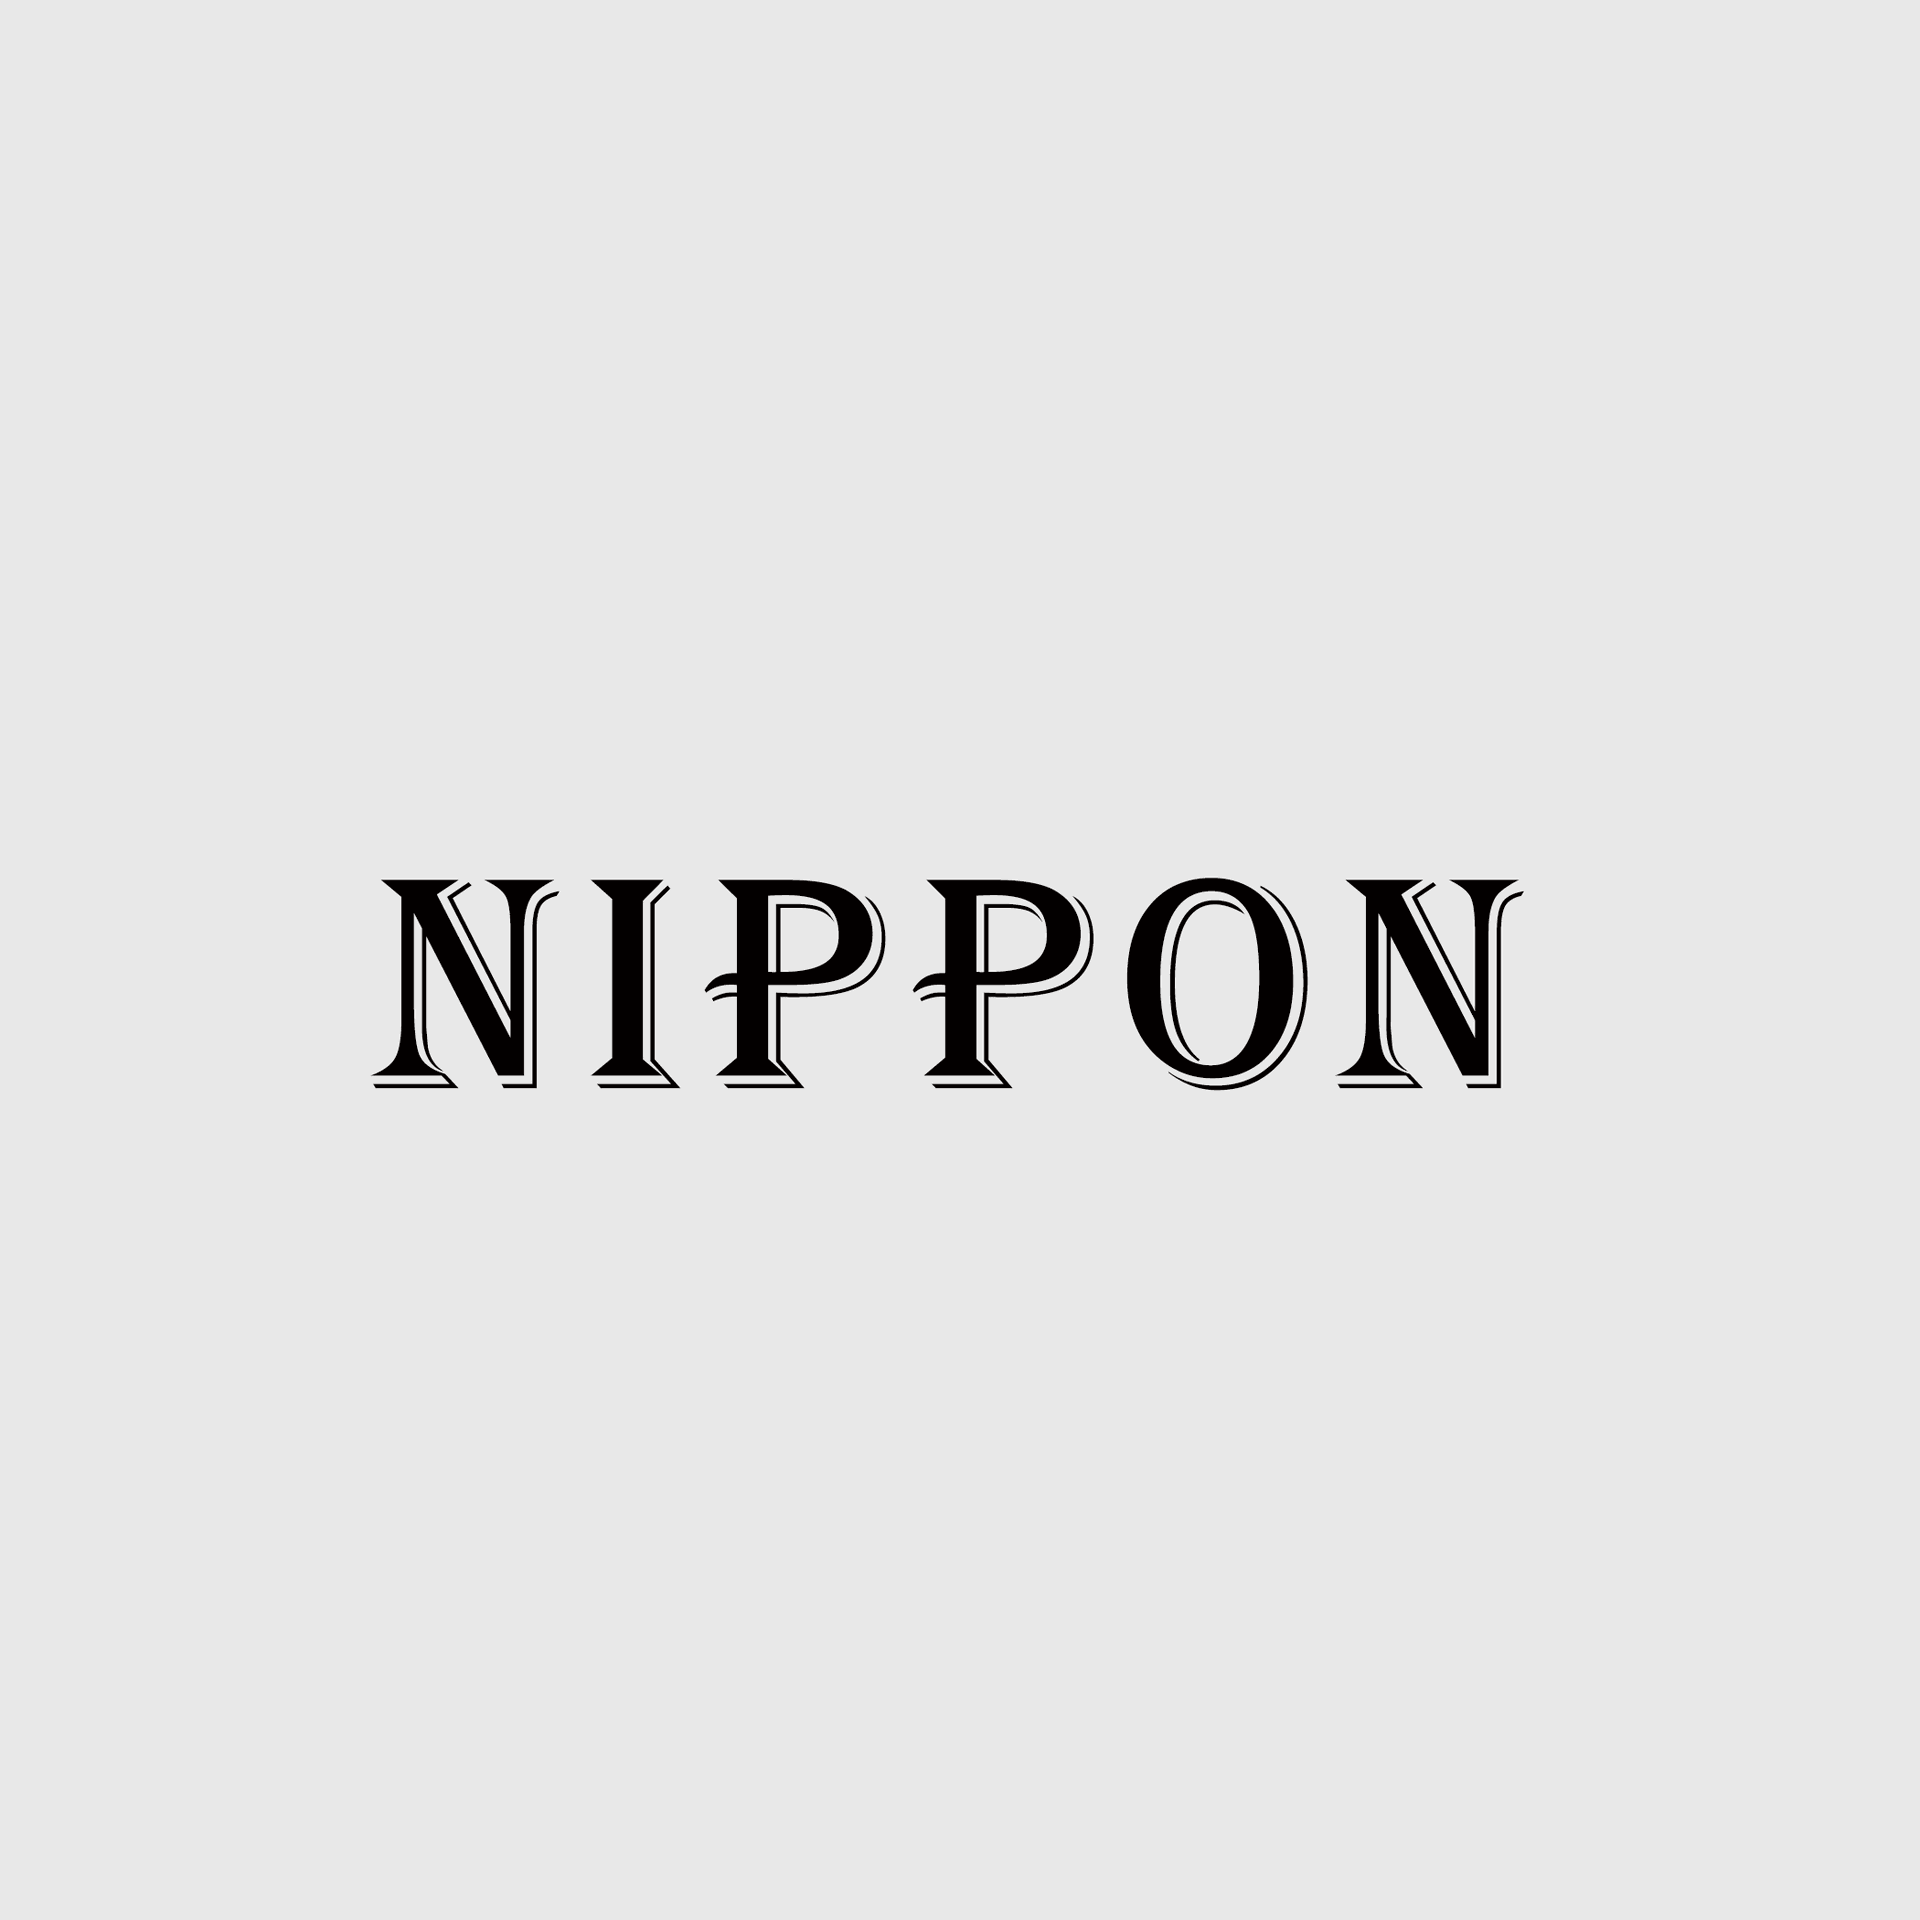 Brand: NIPPON